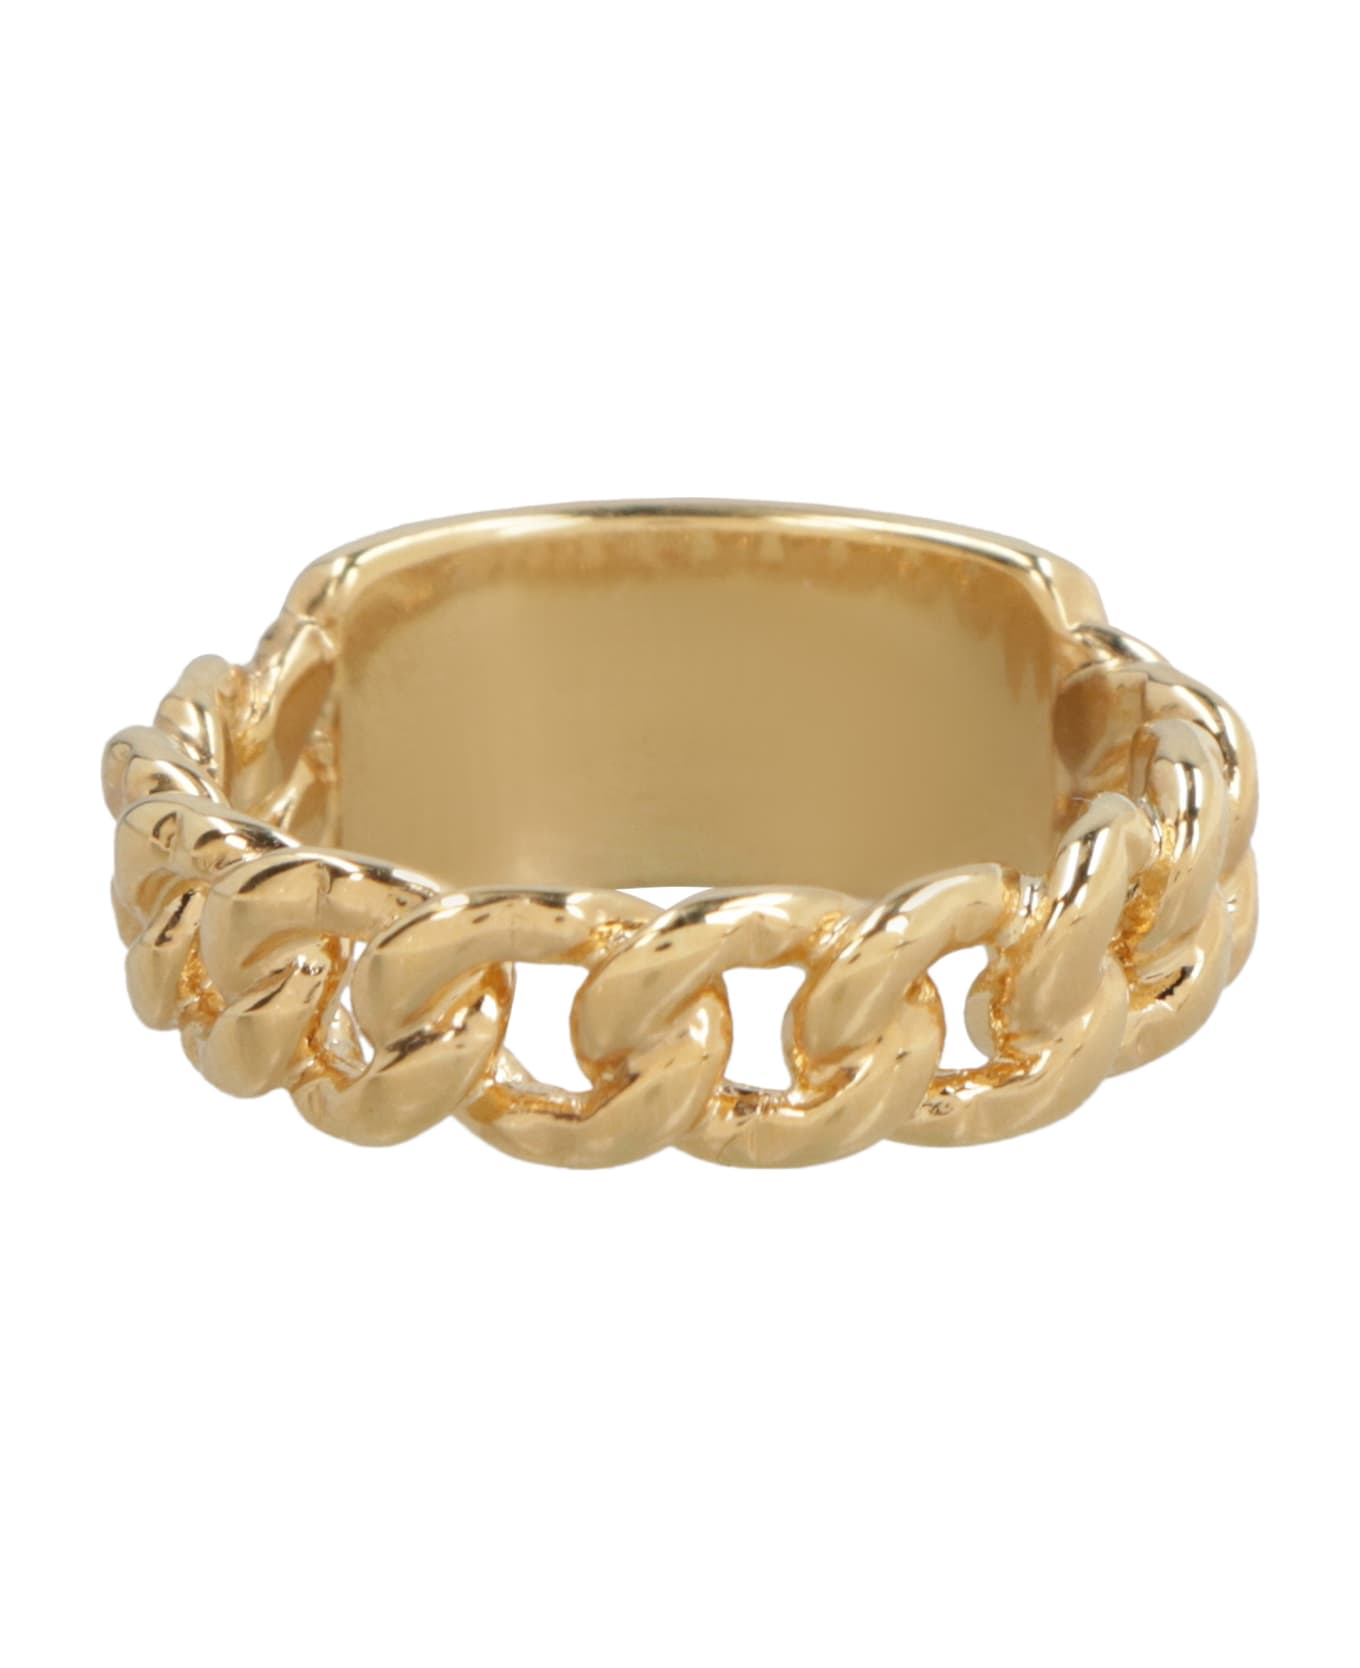 A.P.C. Darwin Brass Ring - Gold リング